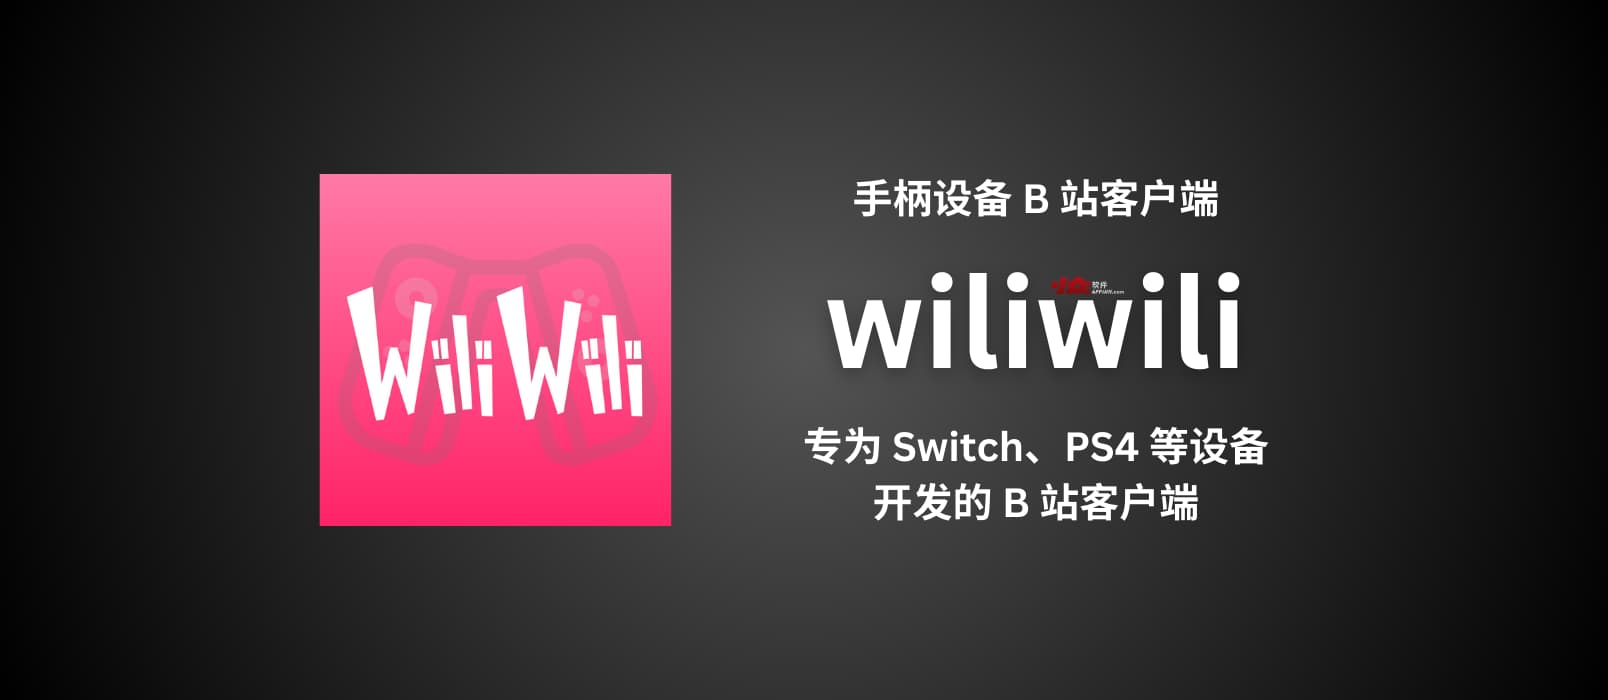 wiliwili - 专为任天堂 Switch、PS4、PSVita 等手柄设备开发的第三方开源 B 站客户端